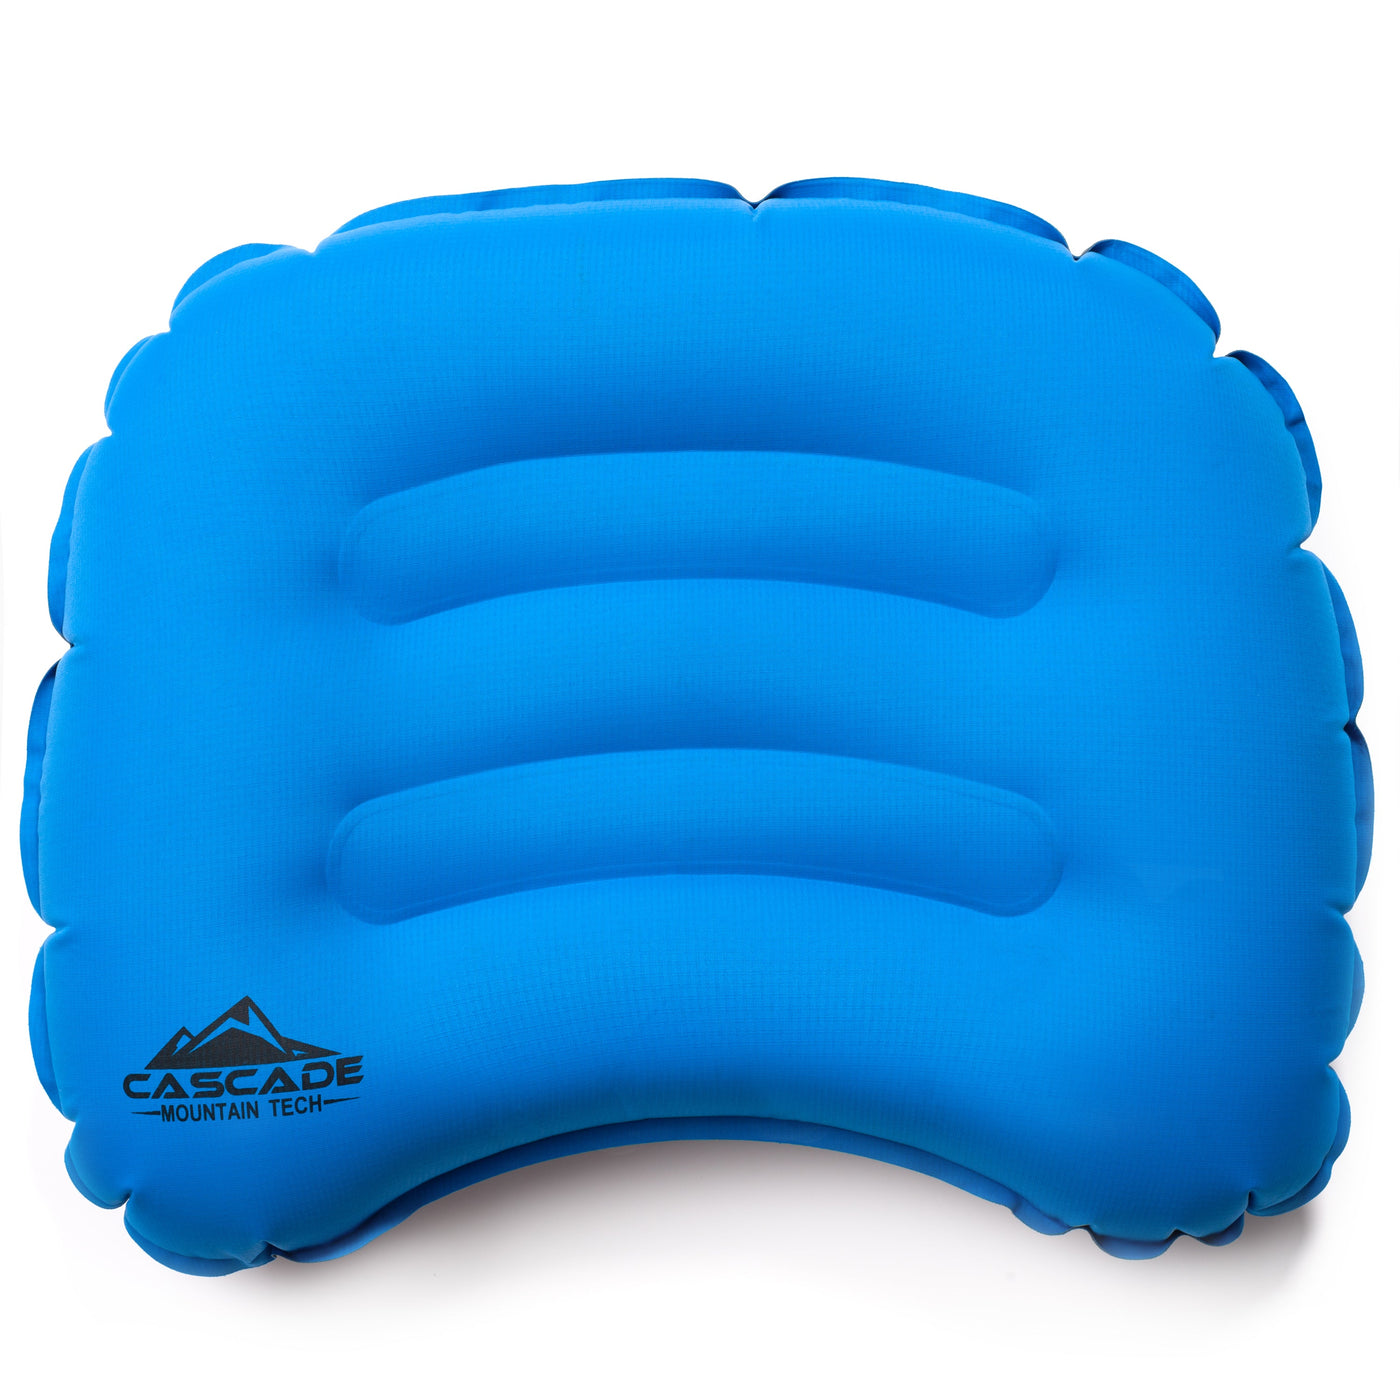 Premium Inflatable Camping Pillow